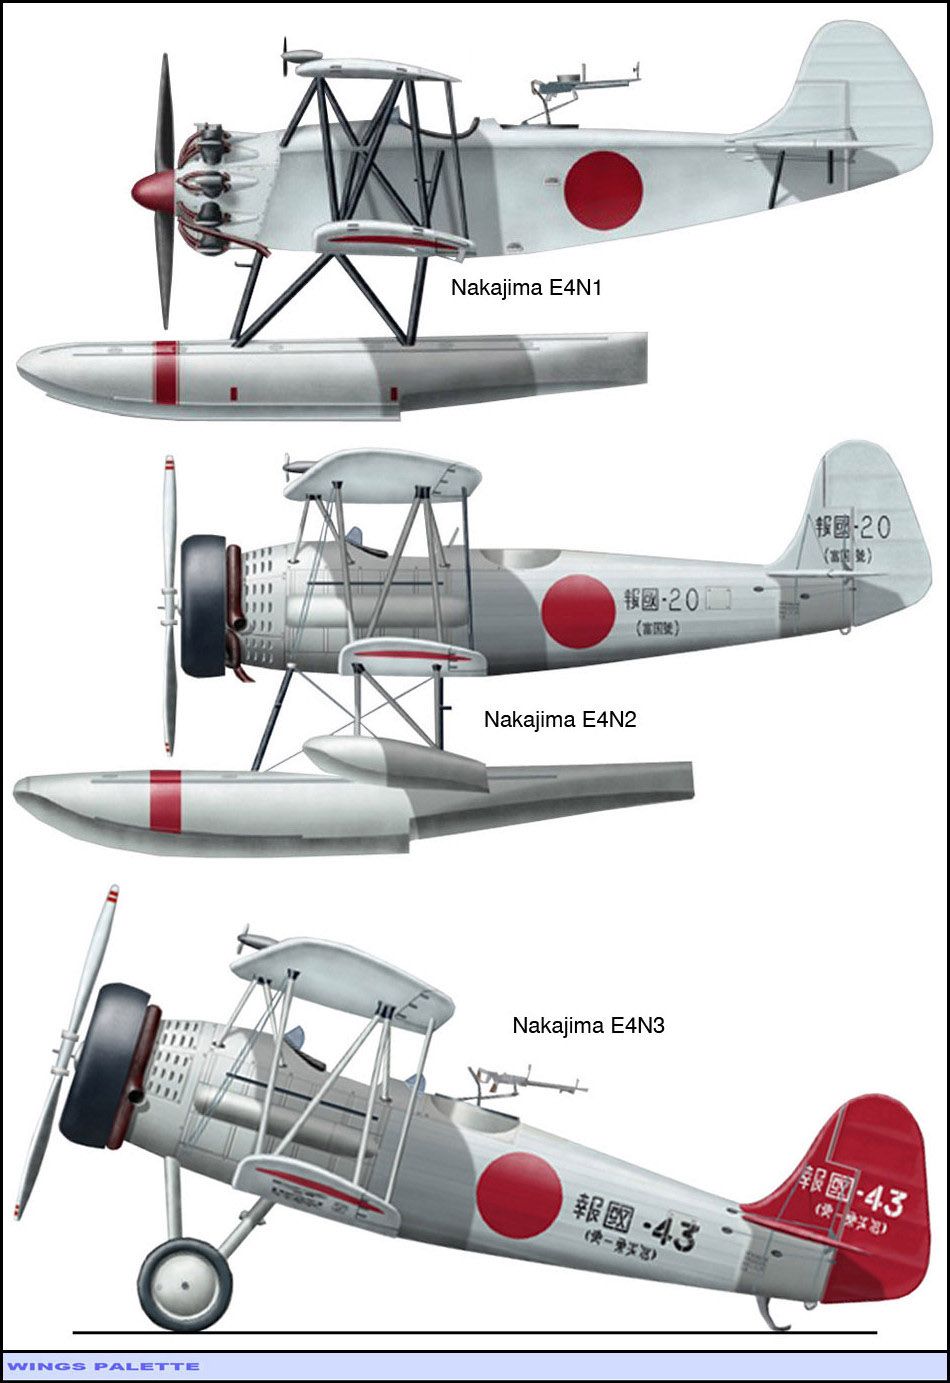 Nakajima E4N - Wikipedia